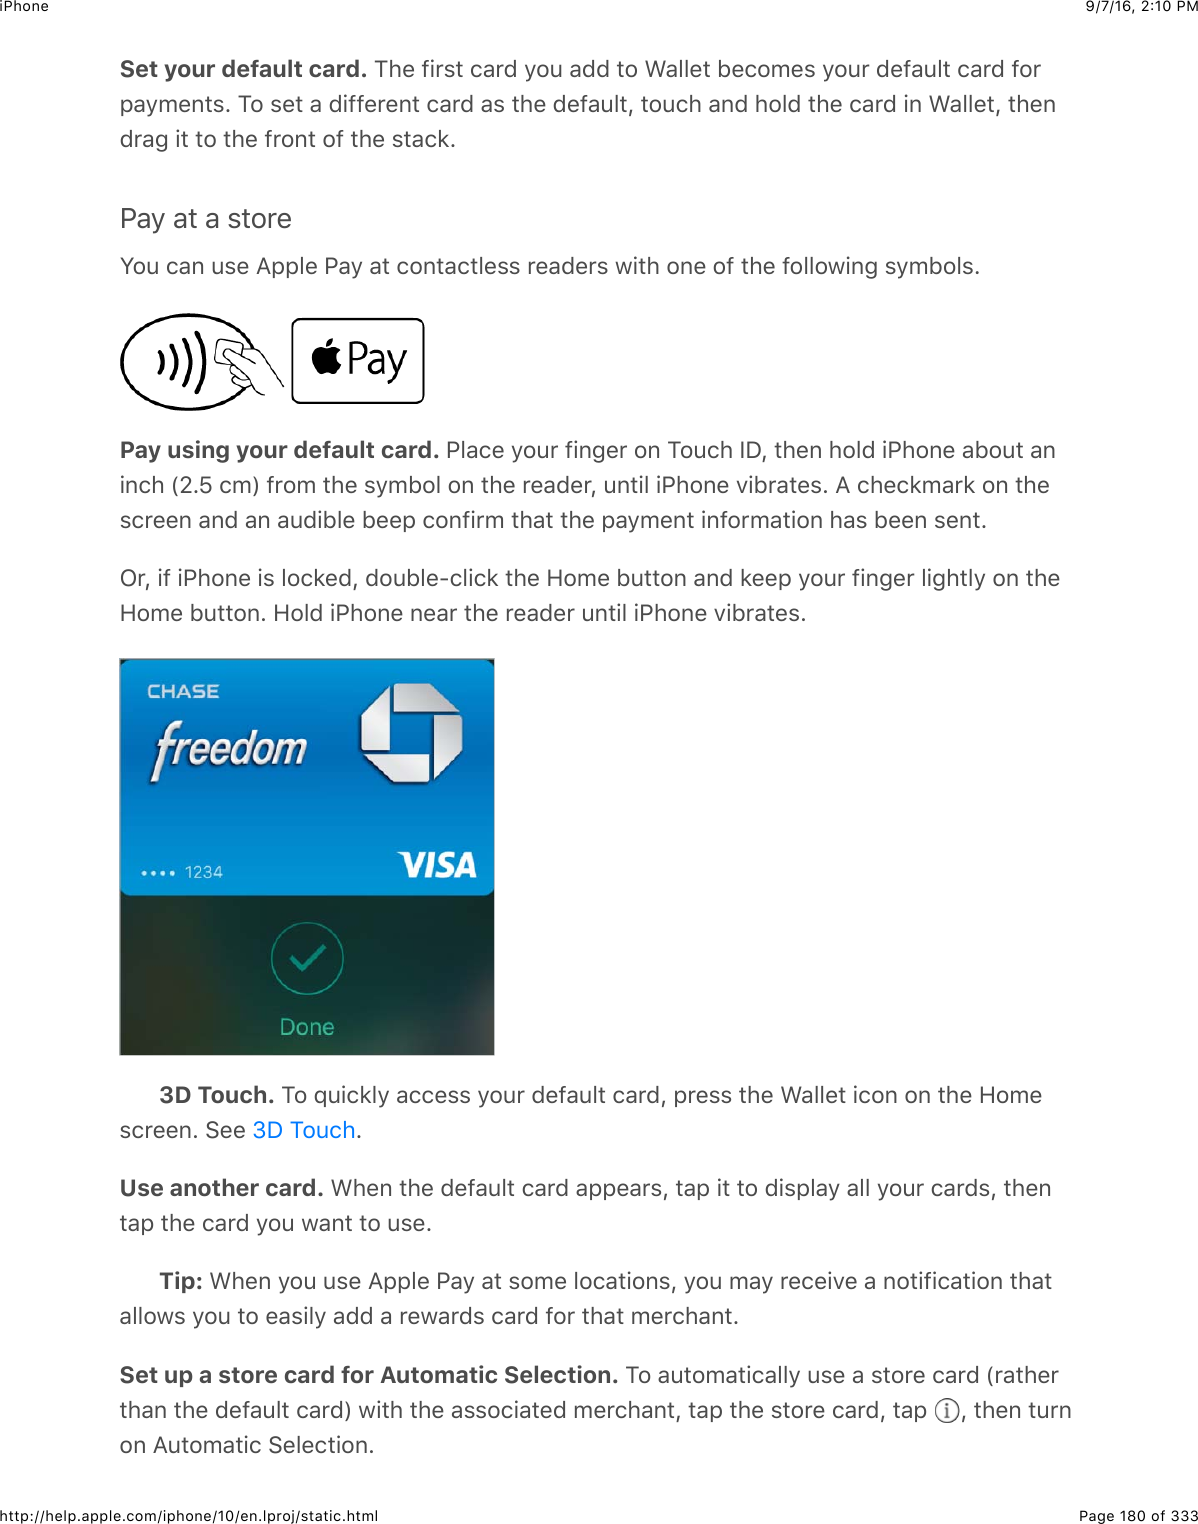 9/7/16, 2)10 PMiPhonePage 180 of 333http://help.apple.com/iphone/10/en.lproj/static.htmlSet your default card. K4&quot;$-+&apos;%#$.&amp;&apos;($92:$&amp;(($#2$A&amp;55&quot;#$1&quot;.20&quot;%$92:&apos;$(&quot;-&amp;:5#$.&amp;&apos;($-2&apos;,&amp;90&quot;6#%=$K2$%&quot;#$&amp;$(+--&quot;&apos;&quot;6#$.&amp;&apos;($&amp;%$#4&quot;$(&quot;-&amp;:5#J$#2:.4$&amp;6($425($#4&quot;$.&amp;&apos;($+6$A&amp;55&quot;#J$#4&quot;6(&apos;&amp;3$+#$#2$#4&quot;$-&apos;26#$2-$#4&quot;$%#&amp;.*=G&amp;9$&amp;#$&amp;$%#2&apos;&quot;W2:$.&amp;6$:%&quot;$I,,5&quot;$G&amp;9$&amp;#$.26#&amp;.#5&quot;%%$&apos;&quot;&amp;(&quot;&apos;%$@+#4$26&quot;$2-$#4&quot;$-2552@+63$%90125%=Pay using your default card. G5&amp;.&quot;$92:&apos;$-+63&quot;&apos;$26$K2:.4$PSJ$#4&quot;6$425($+G426&quot;$&amp;12:#$&amp;6+6.4$`T=\$.0a$-&apos;20$#4&quot;$%90125$26$#4&quot;$&apos;&quot;&amp;(&quot;&apos;J$:6#+5$+G426&quot;$7+1&apos;&amp;#&quot;%=$I$.4&quot;.*0&amp;&apos;*$26$#4&quot;%.&apos;&quot;&quot;6$&amp;6($&amp;6$&amp;:(+15&quot;$1&quot;&quot;,$.26-+&apos;0$#4&amp;#$#4&quot;$,&amp;90&quot;6#$+6-2&apos;0&amp;#+26$4&amp;%$1&quot;&quot;6$%&quot;6#=C&apos;J$+-$+G426&quot;$+%$52.*&quot;(J$(2:15&quot;U.5+.*$#4&quot;$R20&quot;$1:##26$&amp;6($*&quot;&quot;,$92:&apos;$-+63&quot;&apos;$5+34#59$26$#4&quot;R20&quot;$1:##26=$R25($+G426&quot;$6&quot;&amp;&apos;$#4&quot;$&apos;&quot;&amp;(&quot;&apos;$:6#+5$+G426&quot;$7+1&apos;&amp;#&quot;%=3D Touch. K2$_:+.*59$&amp;..&quot;%%$92:&apos;$(&quot;-&amp;:5#$.&amp;&apos;(J$,&apos;&quot;%%$#4&quot;$A&amp;55&quot;#$+.26$26$#4&quot;$R20&quot;%.&apos;&quot;&quot;6=$&gt;&quot;&quot;$ =Use another card. A4&quot;6$#4&quot;$(&quot;-&amp;:5#$.&amp;&apos;($&amp;,,&quot;&amp;&apos;%J$#&amp;,$+#$#2$(+%,5&amp;9$&amp;55$92:&apos;$.&amp;&apos;(%J$#4&quot;6#&amp;,$#4&quot;$.&amp;&apos;($92:$@&amp;6#$#2$:%&quot;=Tip: A4&quot;6$92:$:%&quot;$I,,5&quot;$G&amp;9$&amp;#$%20&quot;$52.&amp;#+26%J$92:$0&amp;9$&apos;&quot;.&quot;+7&quot;$&amp;$62#+-+.&amp;#+26$#4&amp;#&amp;552@%$92:$#2$&quot;&amp;%+59$&amp;(($&amp;$&apos;&quot;@&amp;&apos;(%$.&amp;&apos;($-2&apos;$#4&amp;#$0&quot;&apos;.4&amp;6#=Set up a store card for Automatic Selection. K2$&amp;:#20&amp;#+.&amp;559$:%&quot;$&amp;$%#2&apos;&quot;$.&amp;&apos;($`&apos;&amp;#4&quot;&apos;#4&amp;6$#4&quot;$(&quot;-&amp;:5#$.&amp;&apos;(a$@+#4$#4&quot;$&amp;%%2.+&amp;#&quot;($0&quot;&apos;.4&amp;6#J$#&amp;,$#4&quot;$%#2&apos;&quot;$.&amp;&apos;(J$#&amp;,$ J$#4&quot;6$#:&apos;626$I:#20&amp;#+.$&gt;&quot;5&quot;.#+26=eS$K2:.4